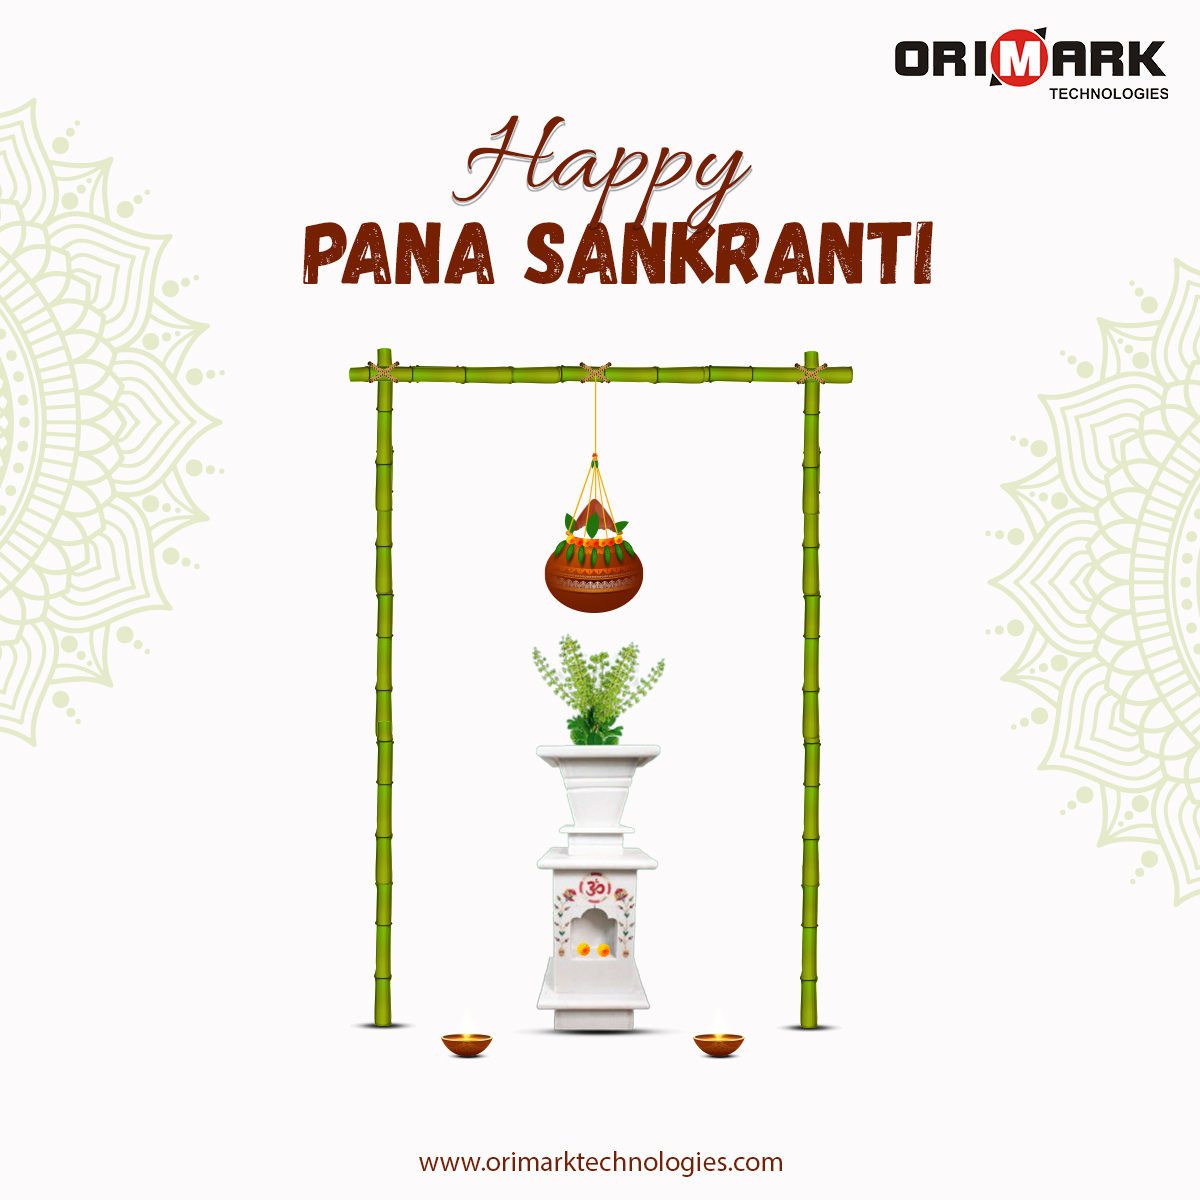 Wishing you a radiant Pana Sankranti from Orimark Technologies!

#PanaSankranti  #OrimarkTechnologies #HarvestSeason #NewBeginnings #Prosperity #FamilyCelebration #JoyfulMoments